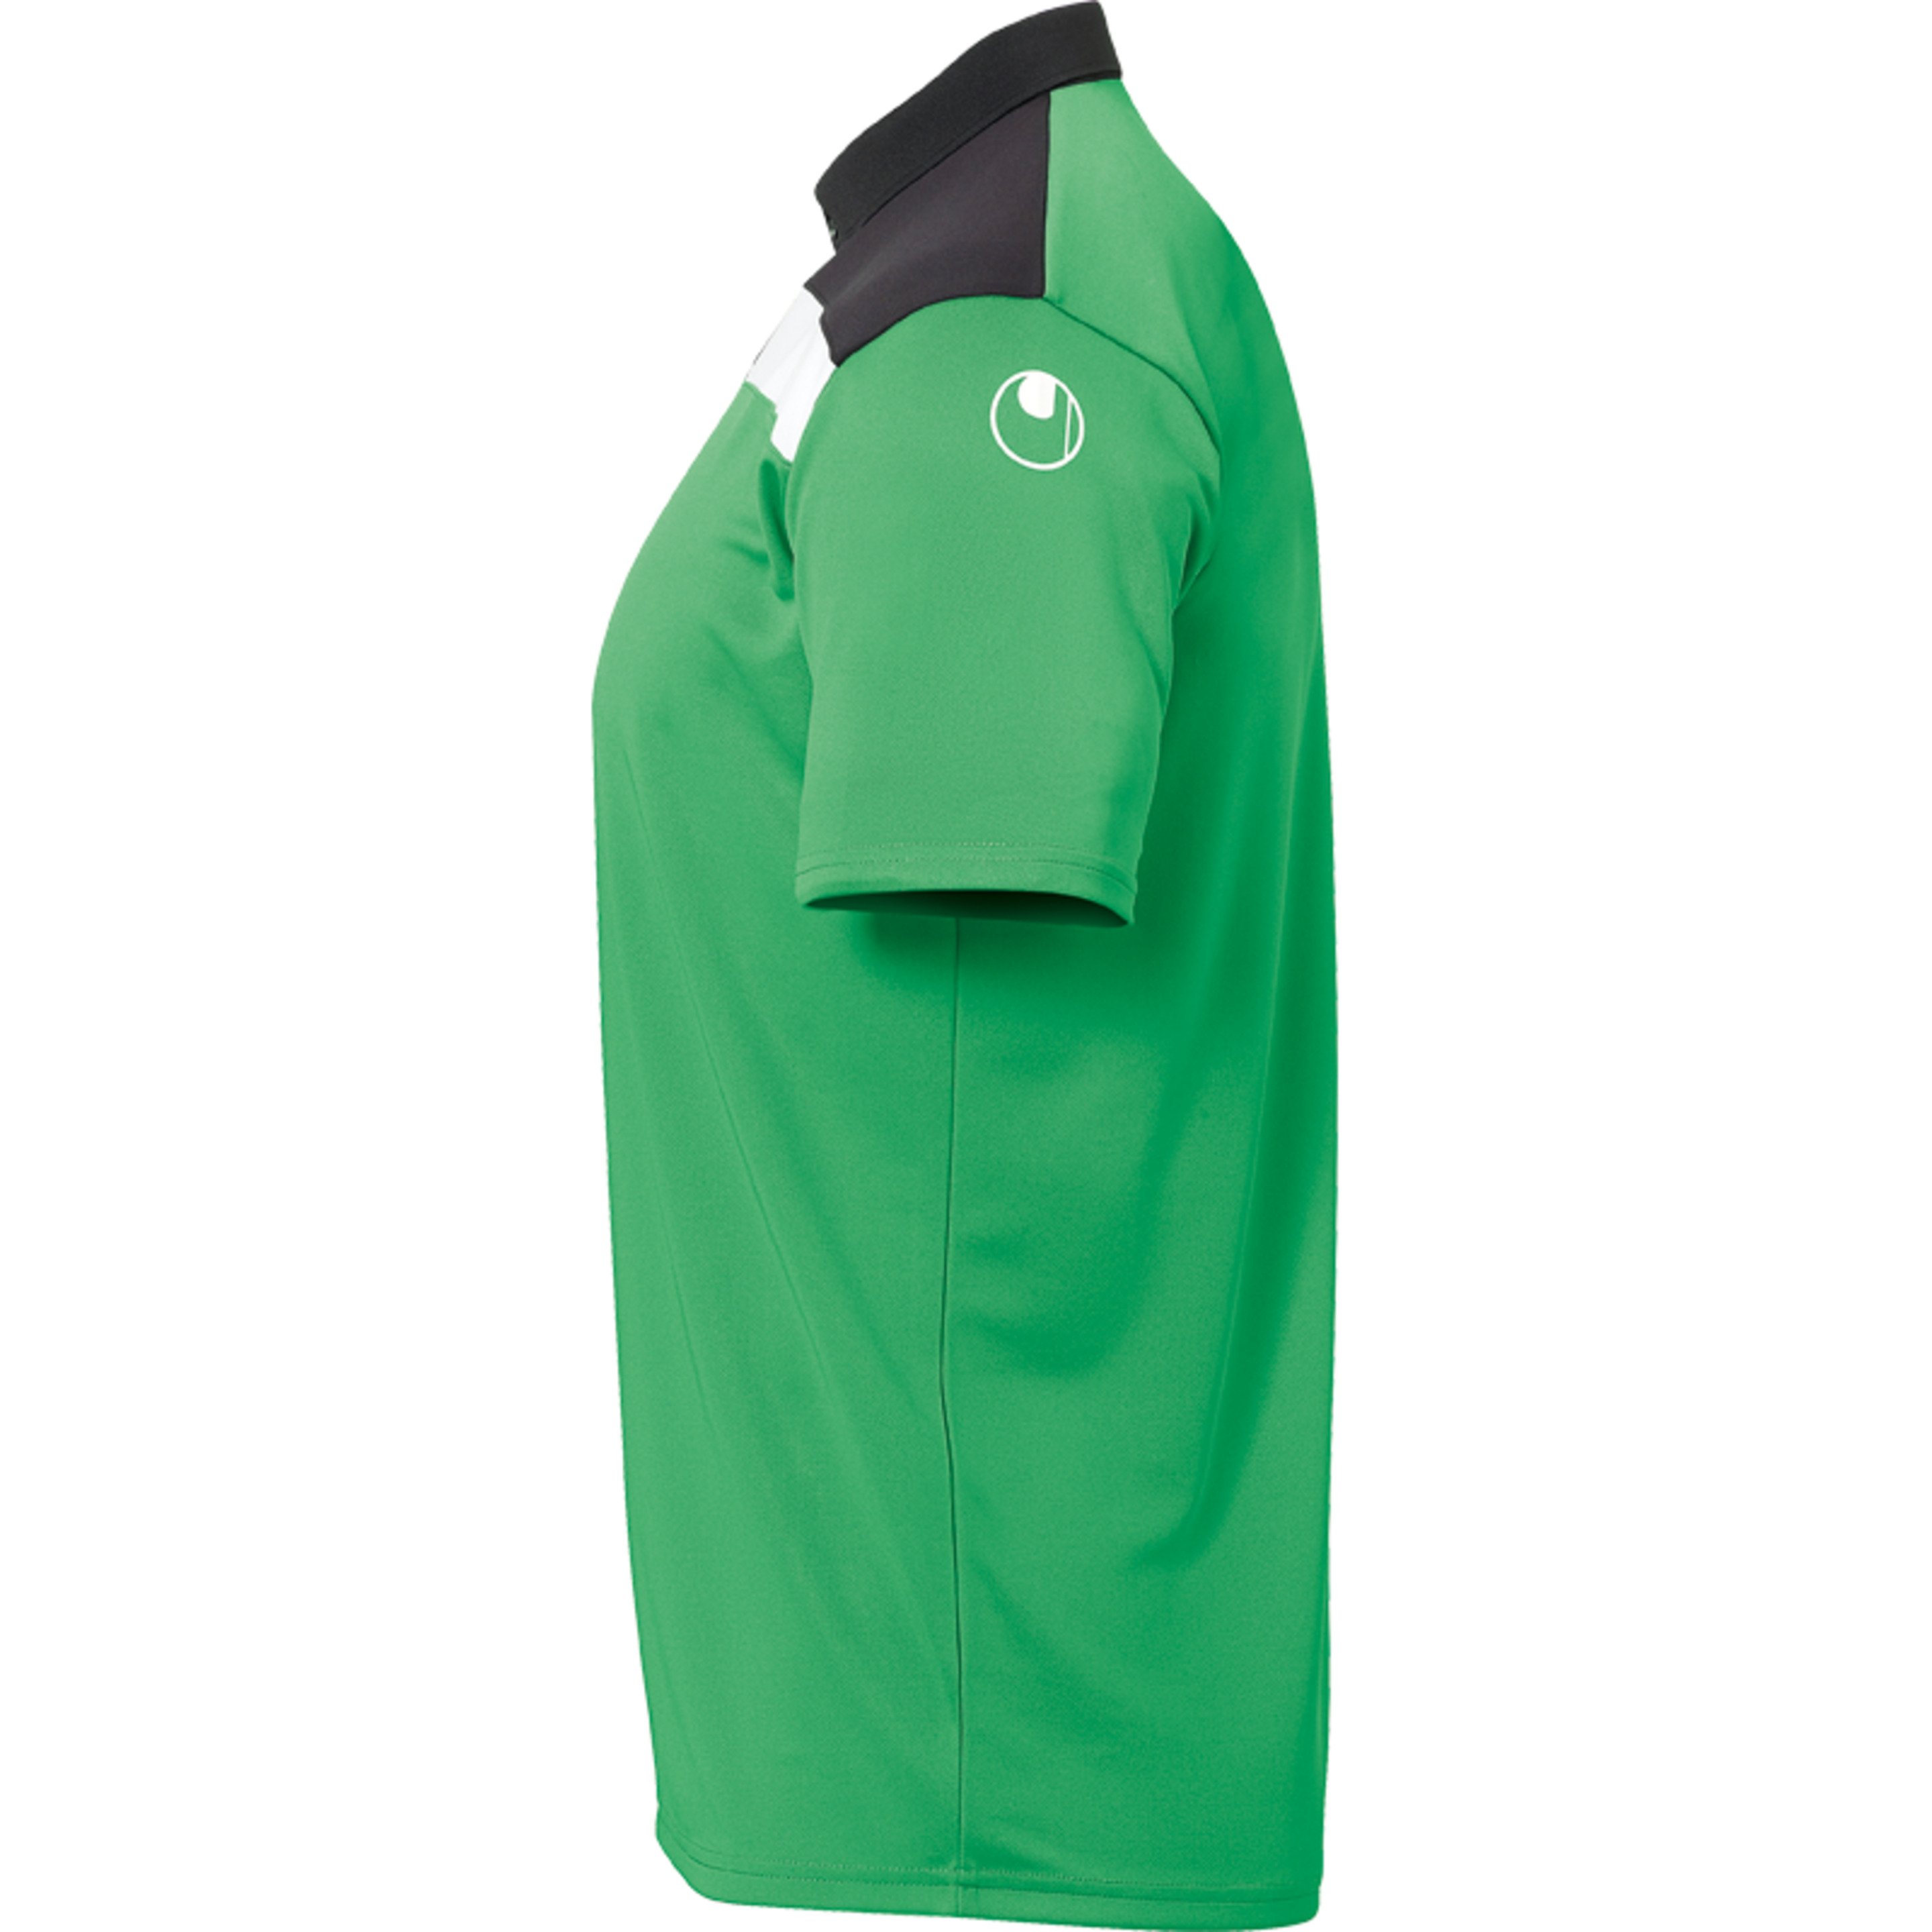 Offense 23 Polo Shirt Verde/negro/blanco Uhlsport